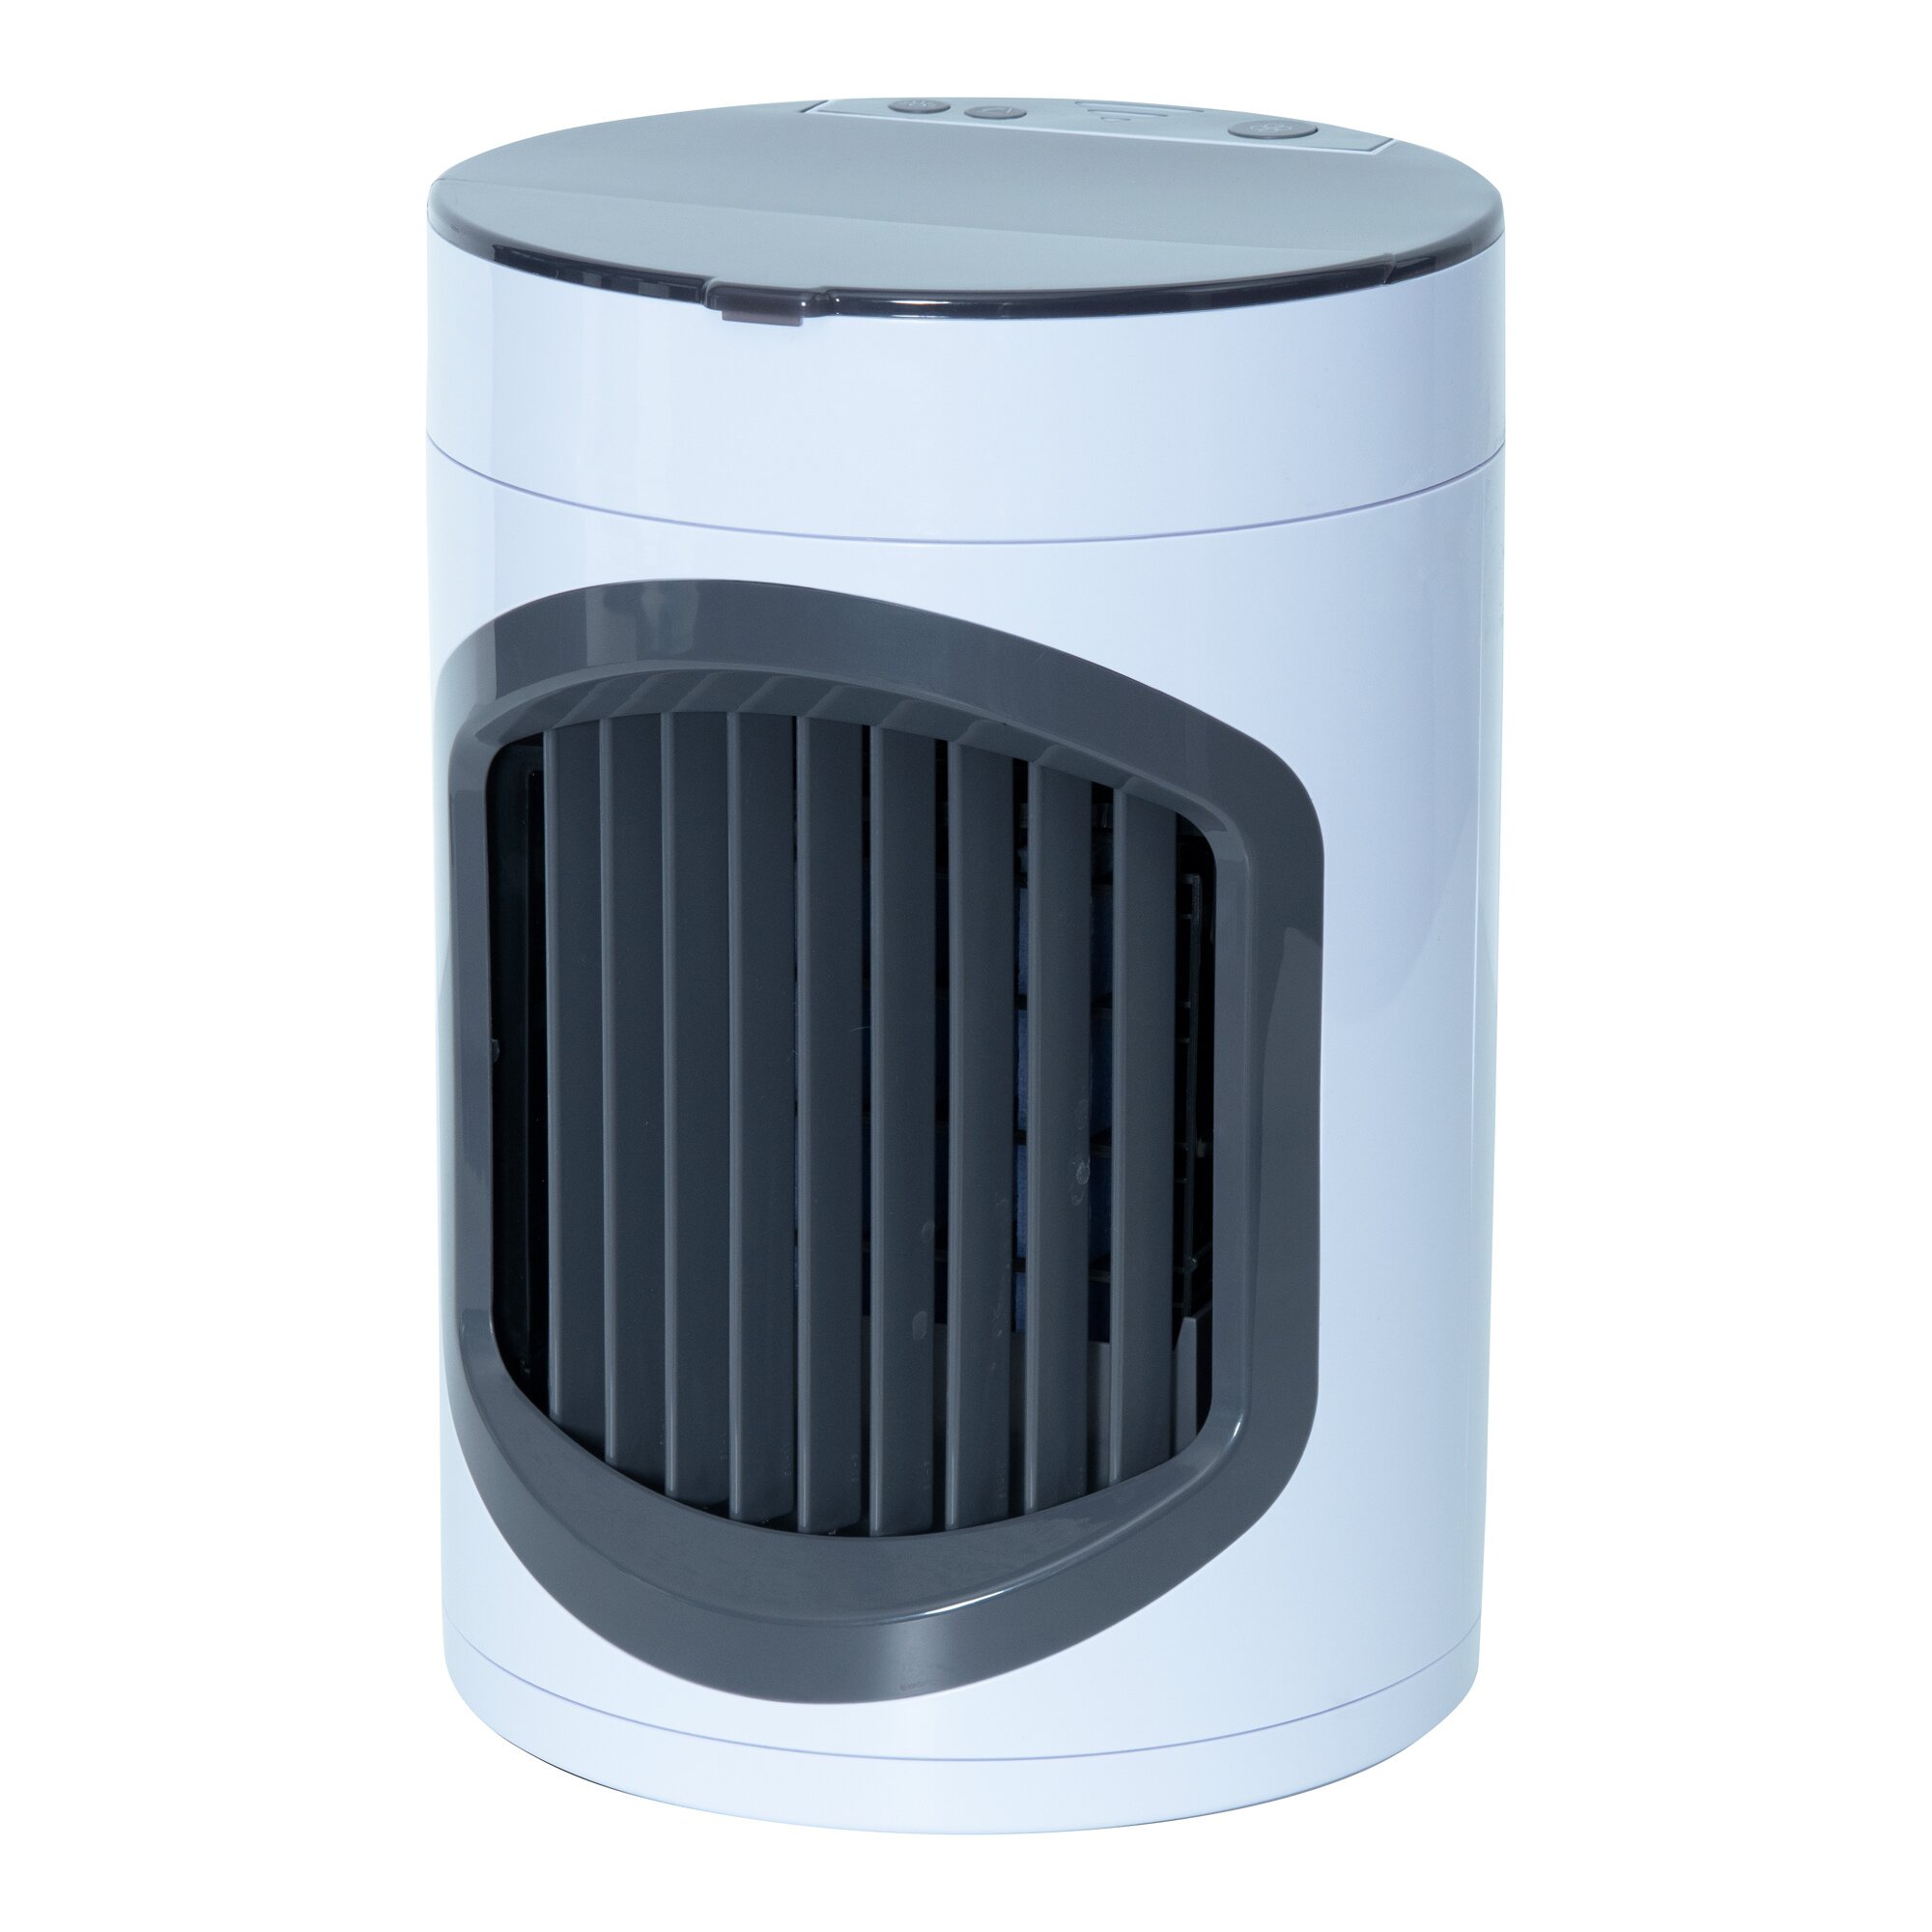 Image of Mobiler Luftkühler "Livington SmartChill" von Mediashop, weiß